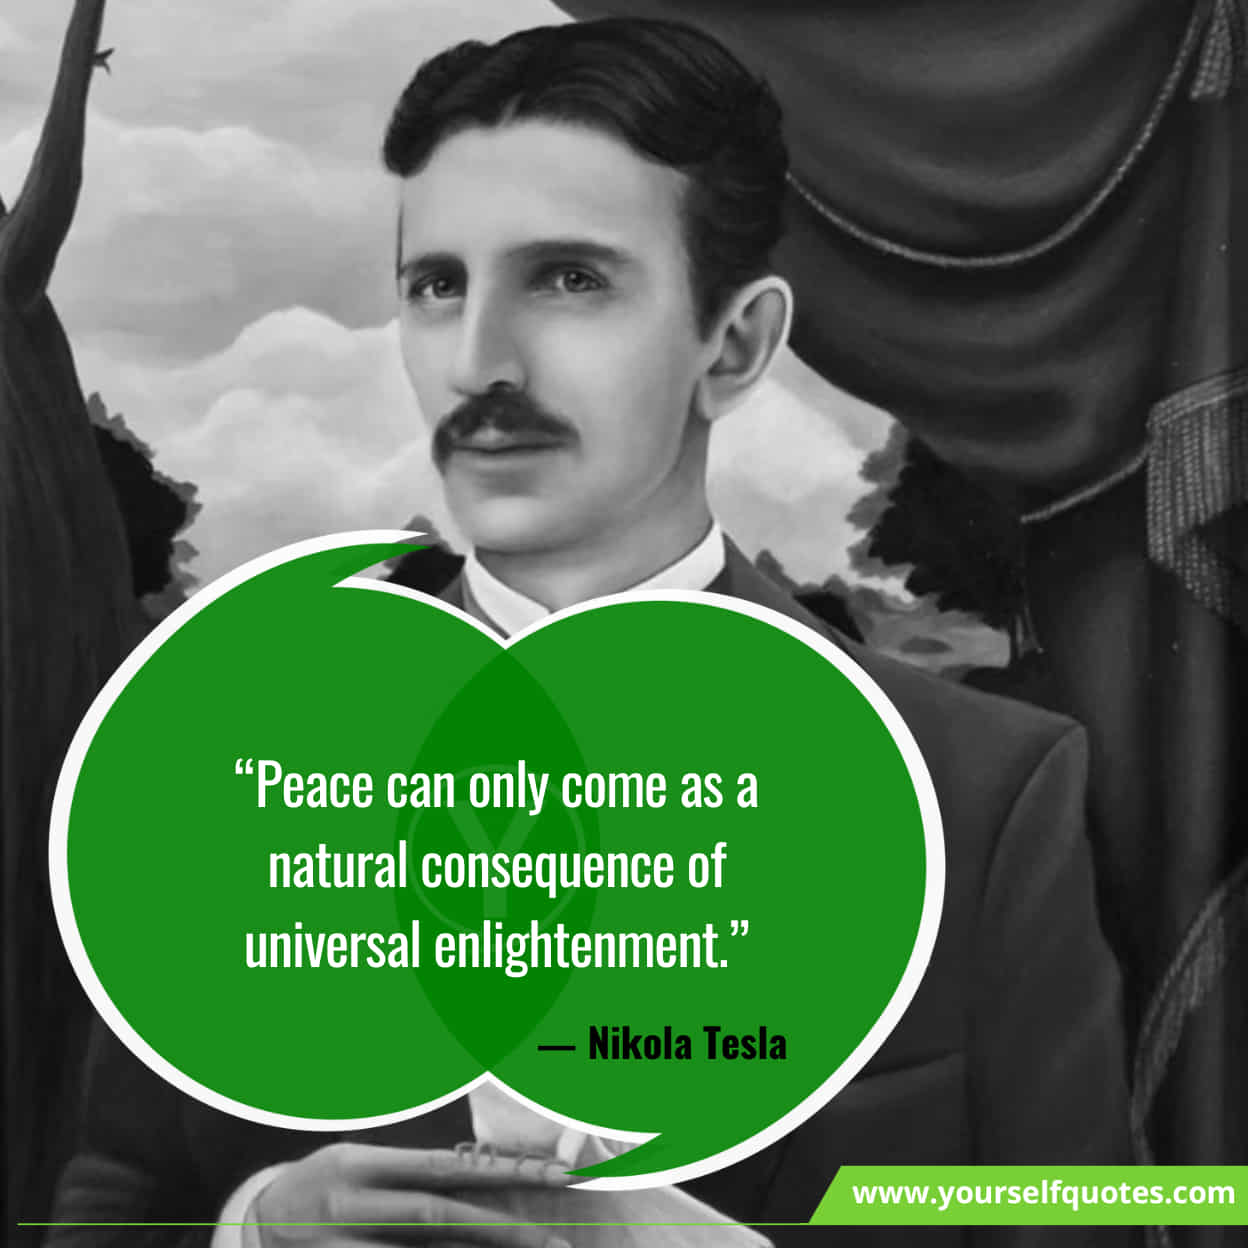 Best Nikola Tesla Quotes